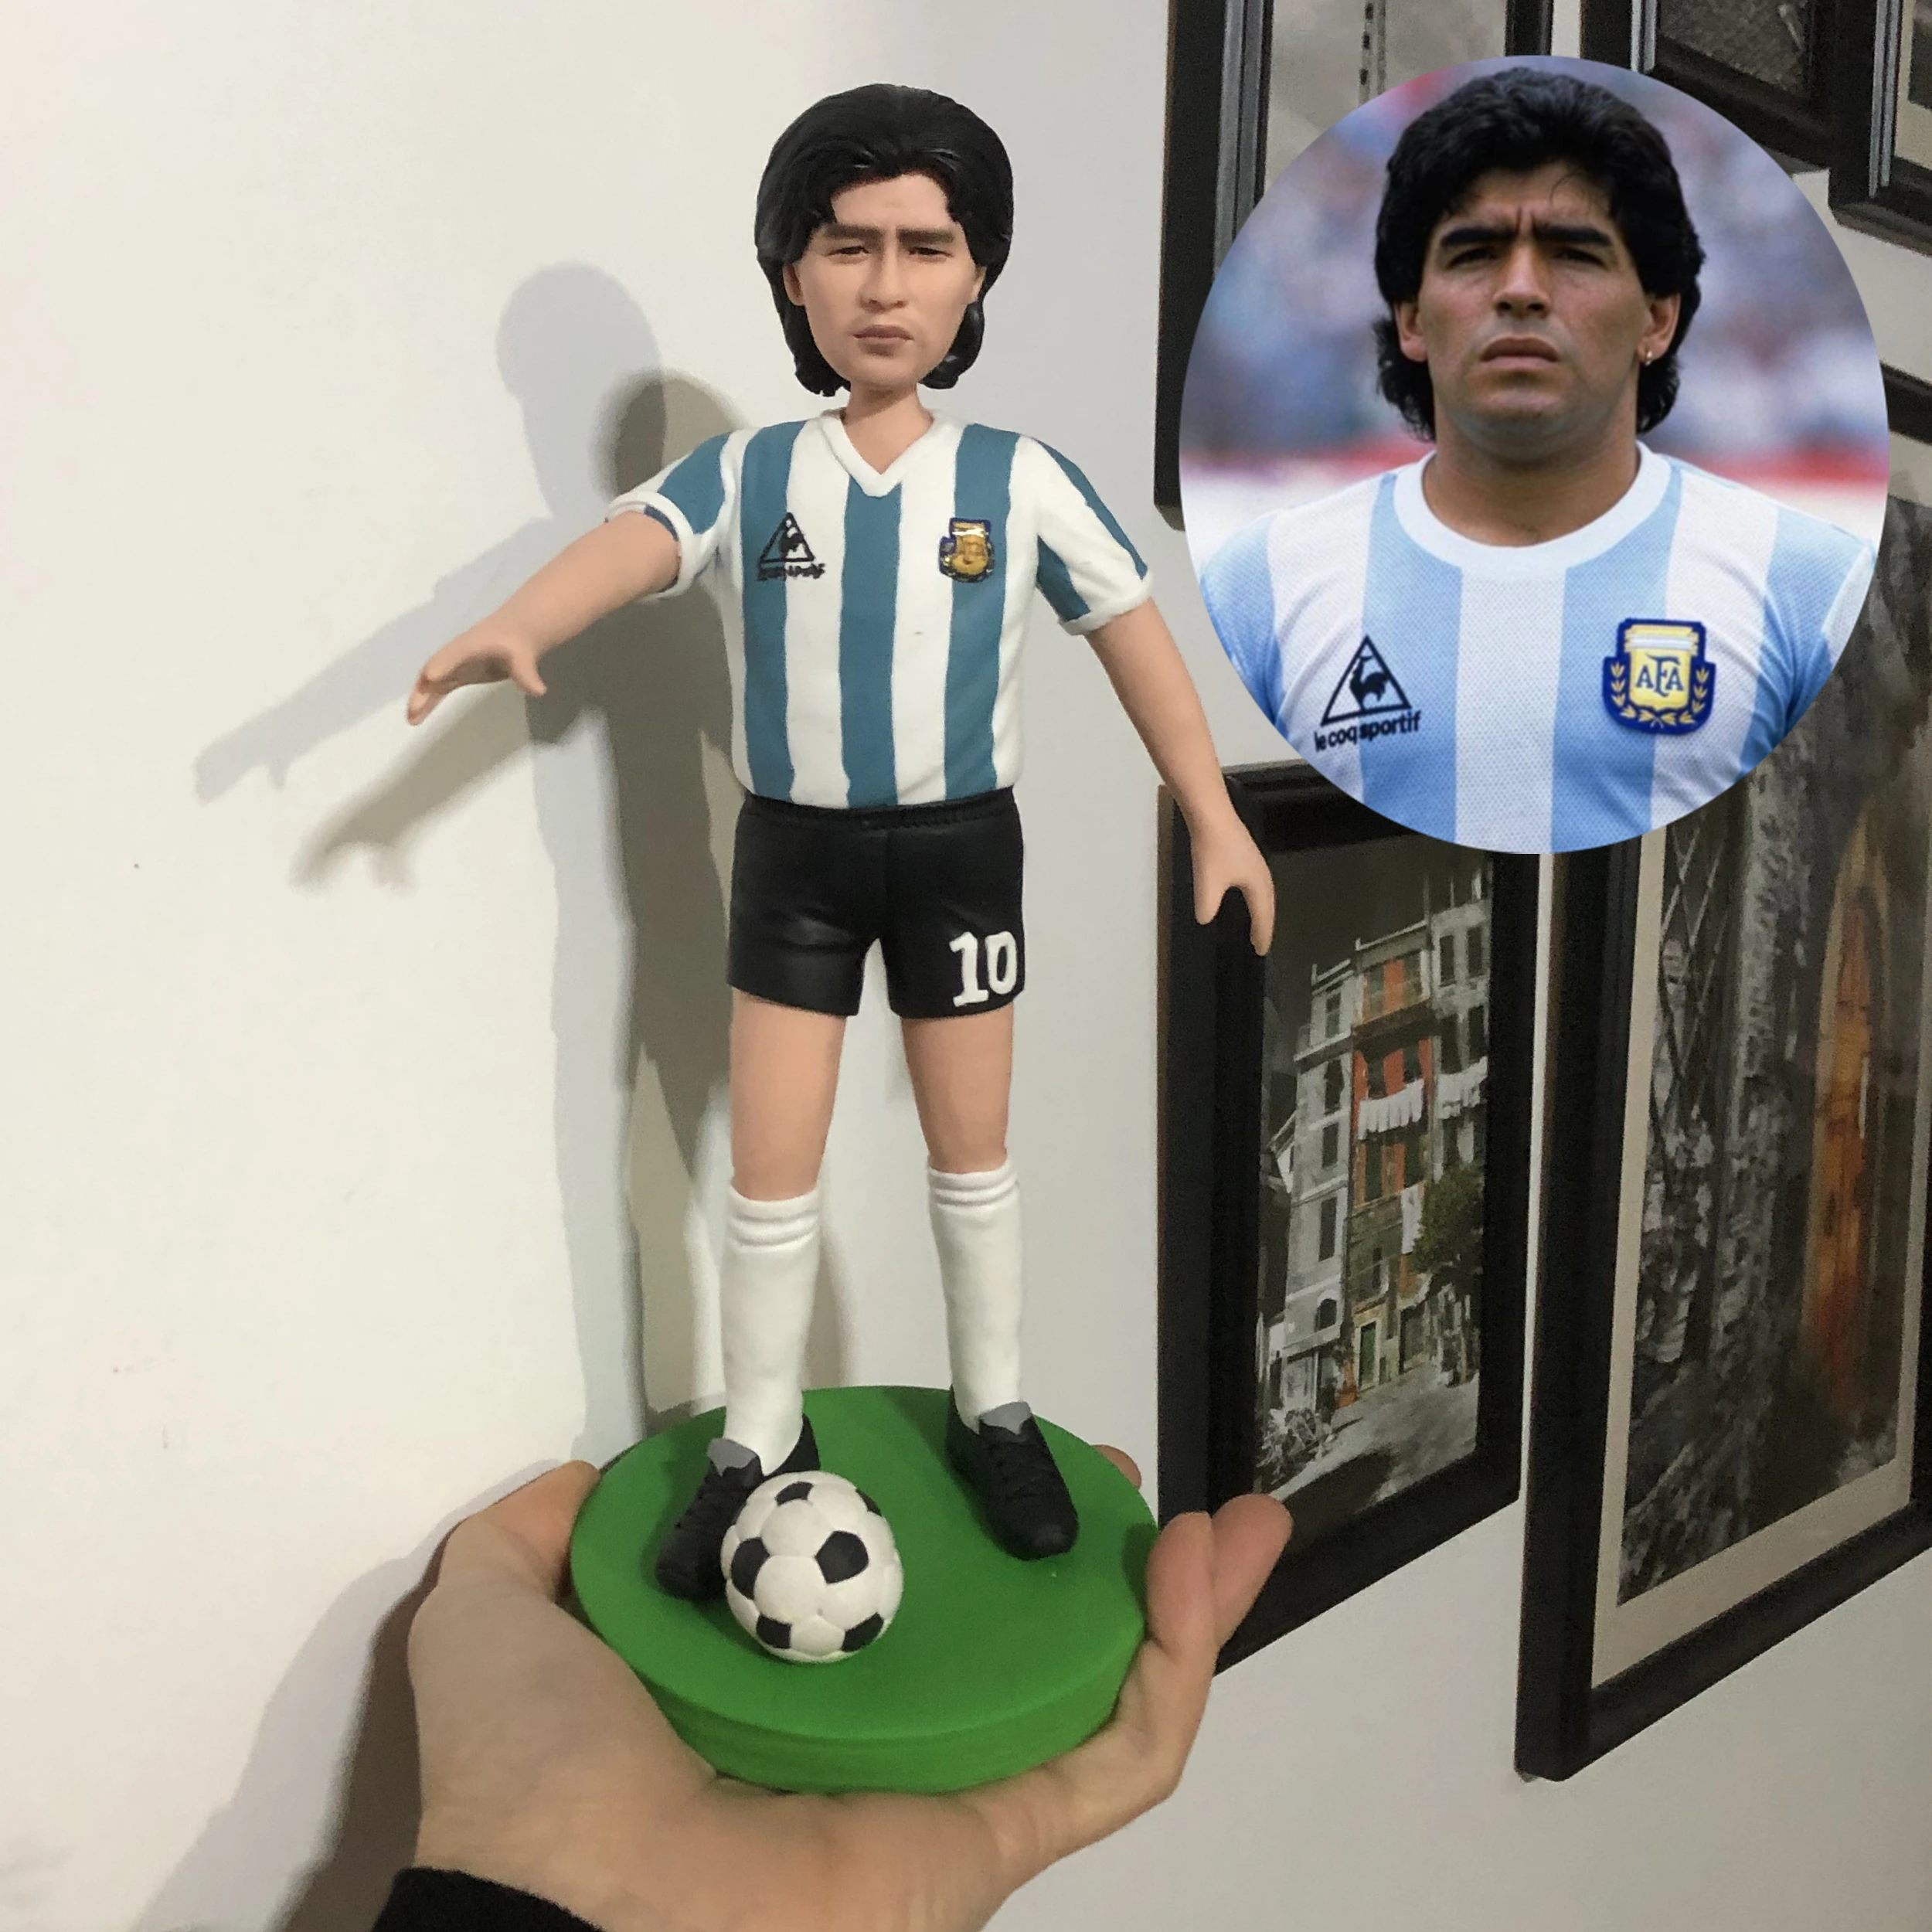 Handmade Polaymer Clay Football Player Dolls Diego Maradona Figures 16-24cm height